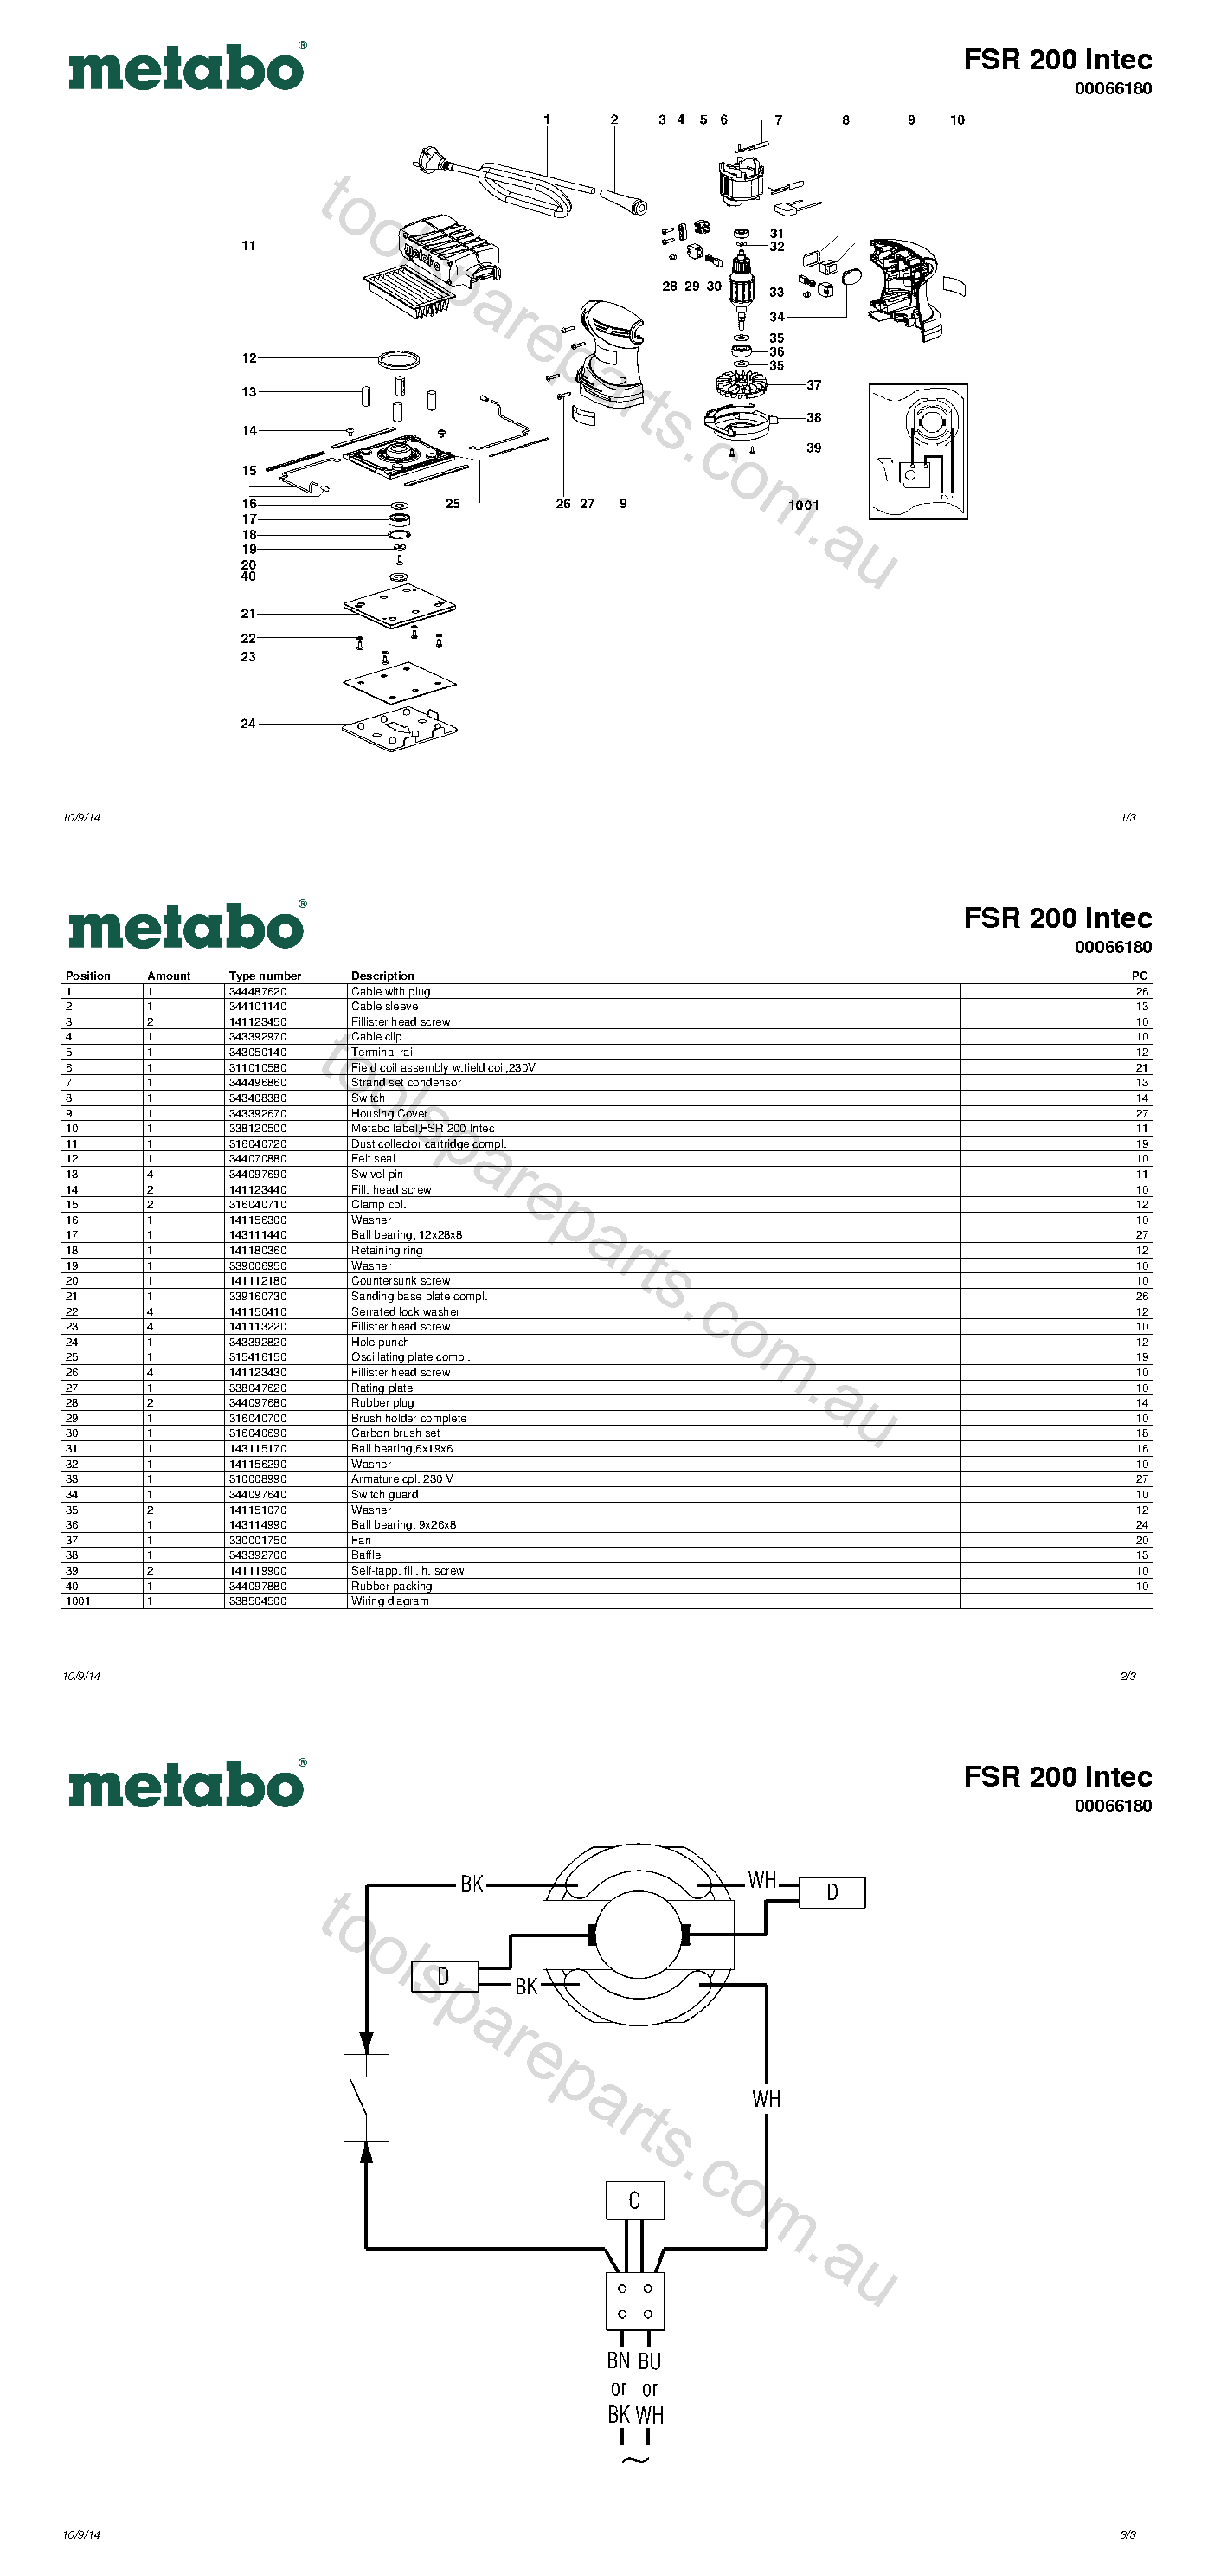 Metabo FSR 200 Intec 00066180  Diagram 1